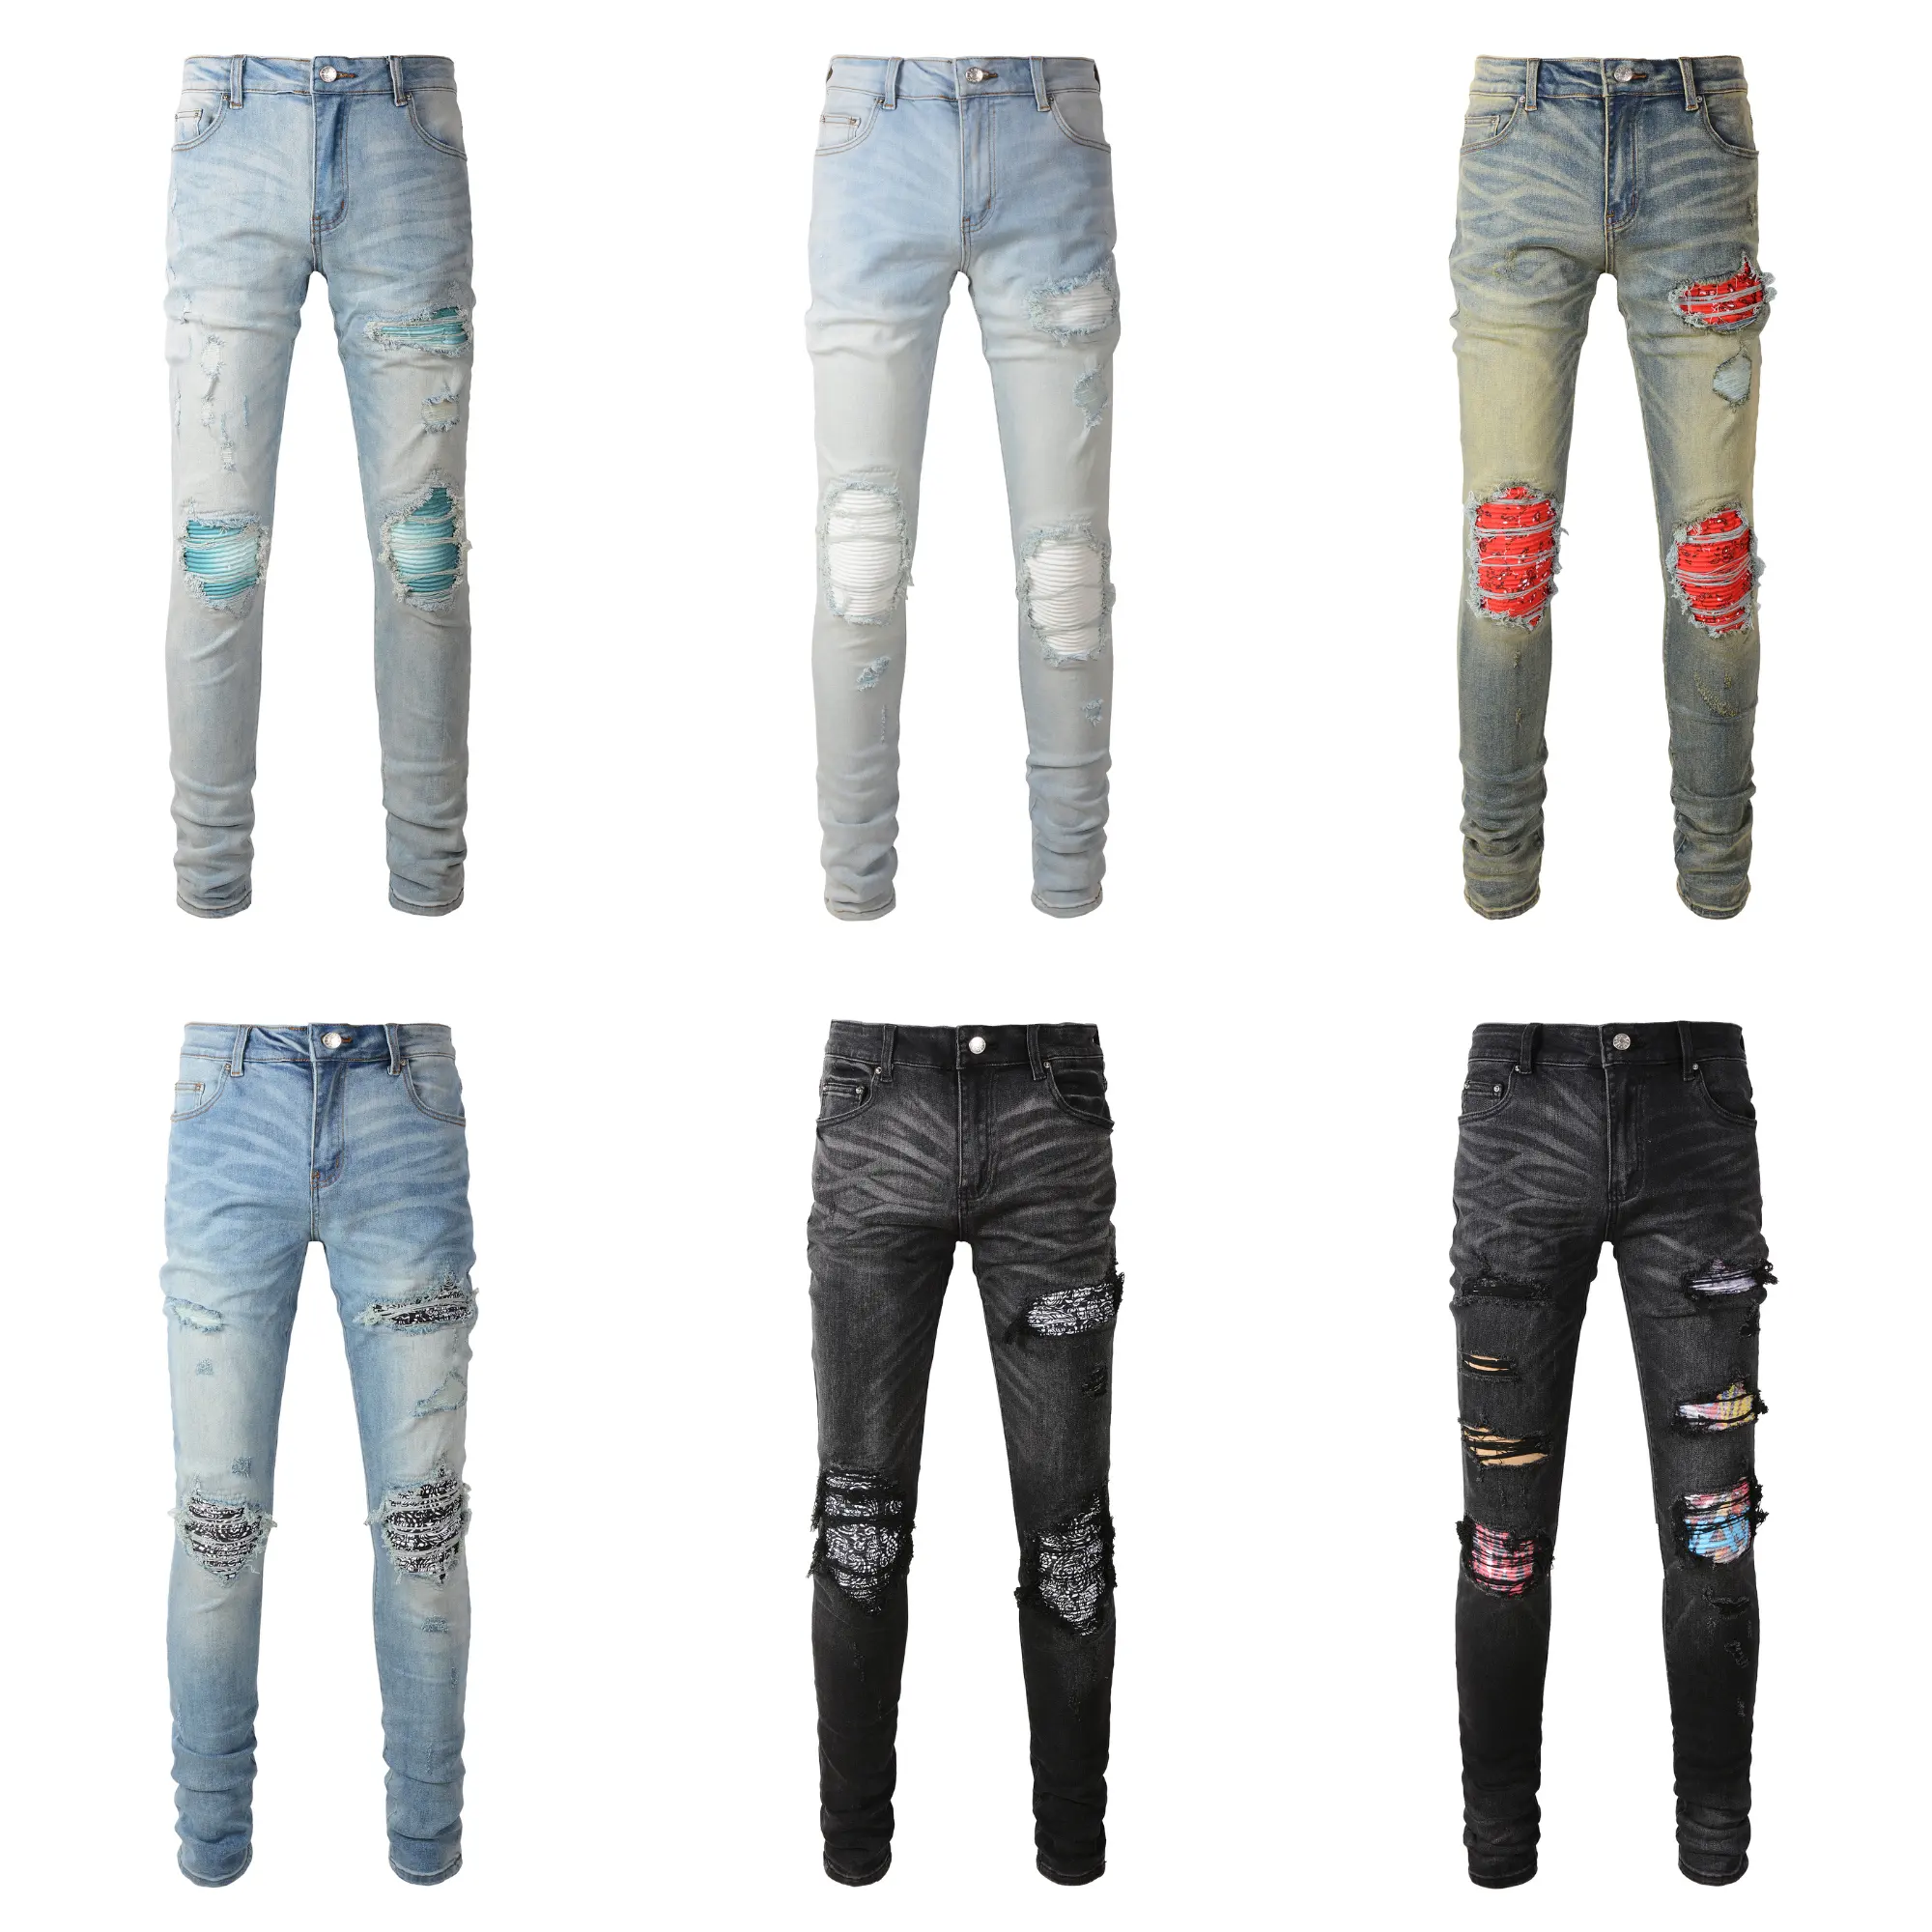 Rts For Drop shipping bandana patched Jean Fashion Designer Slim Skinny Denim Men Jeans